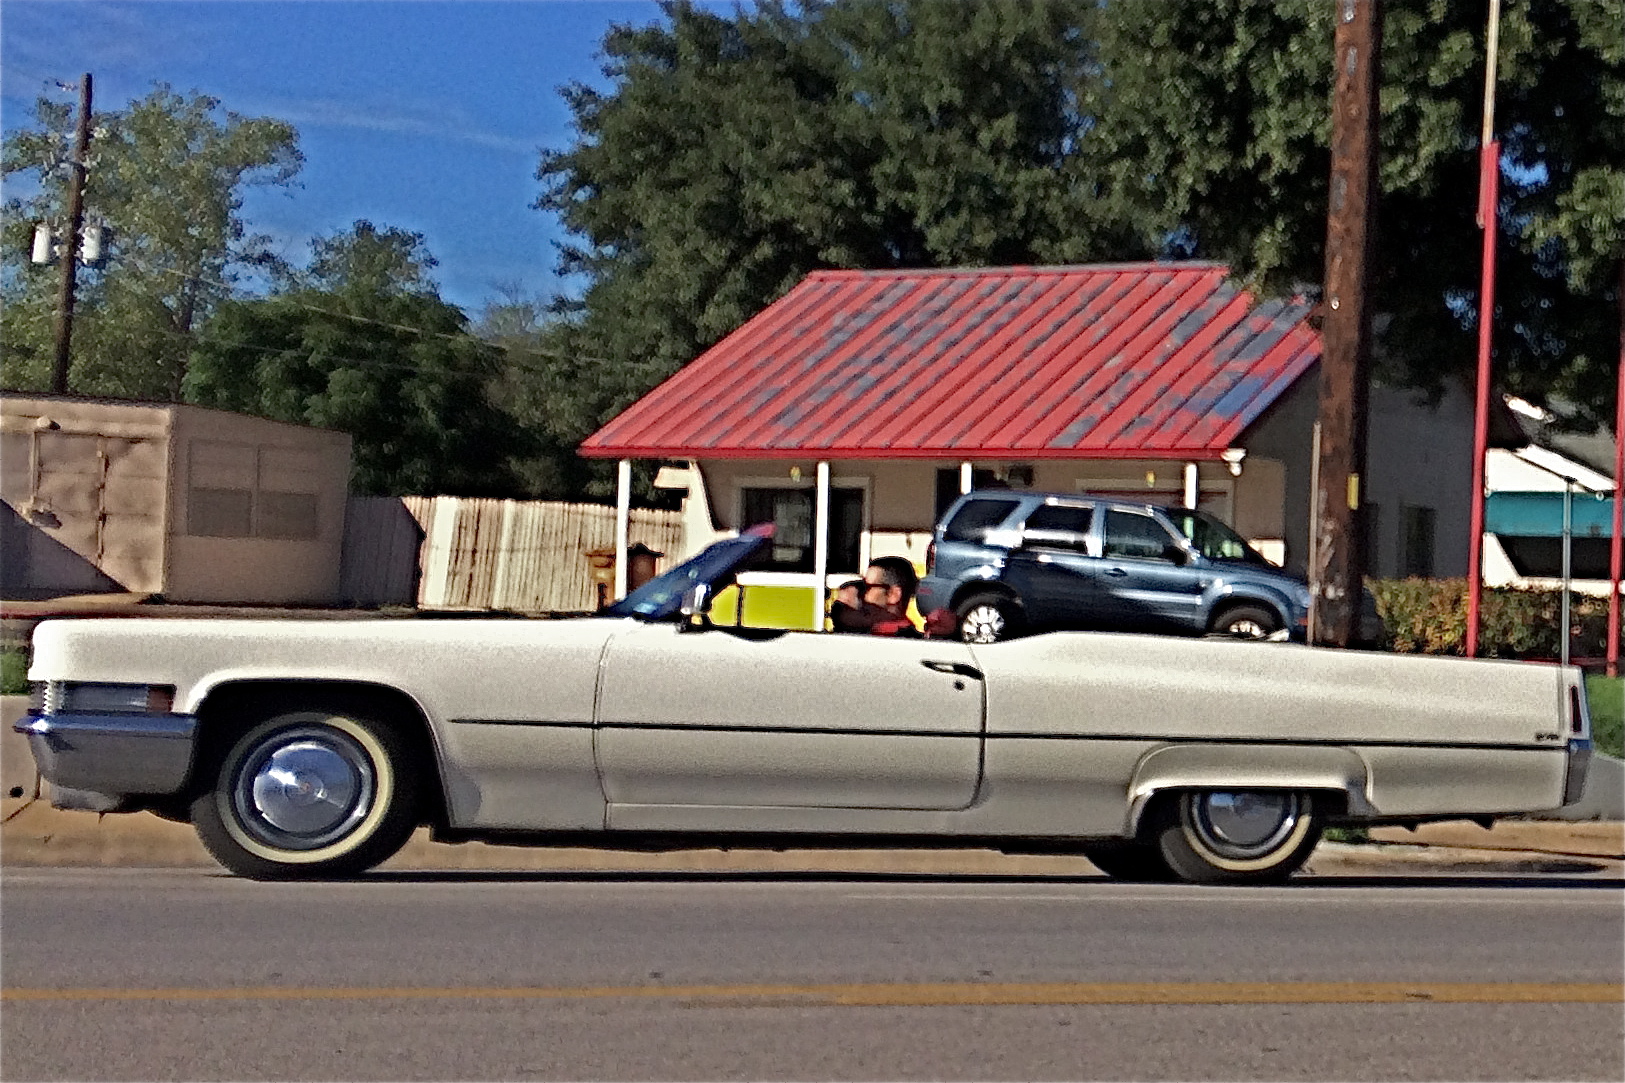 White 1970 Cadillac on Lamar